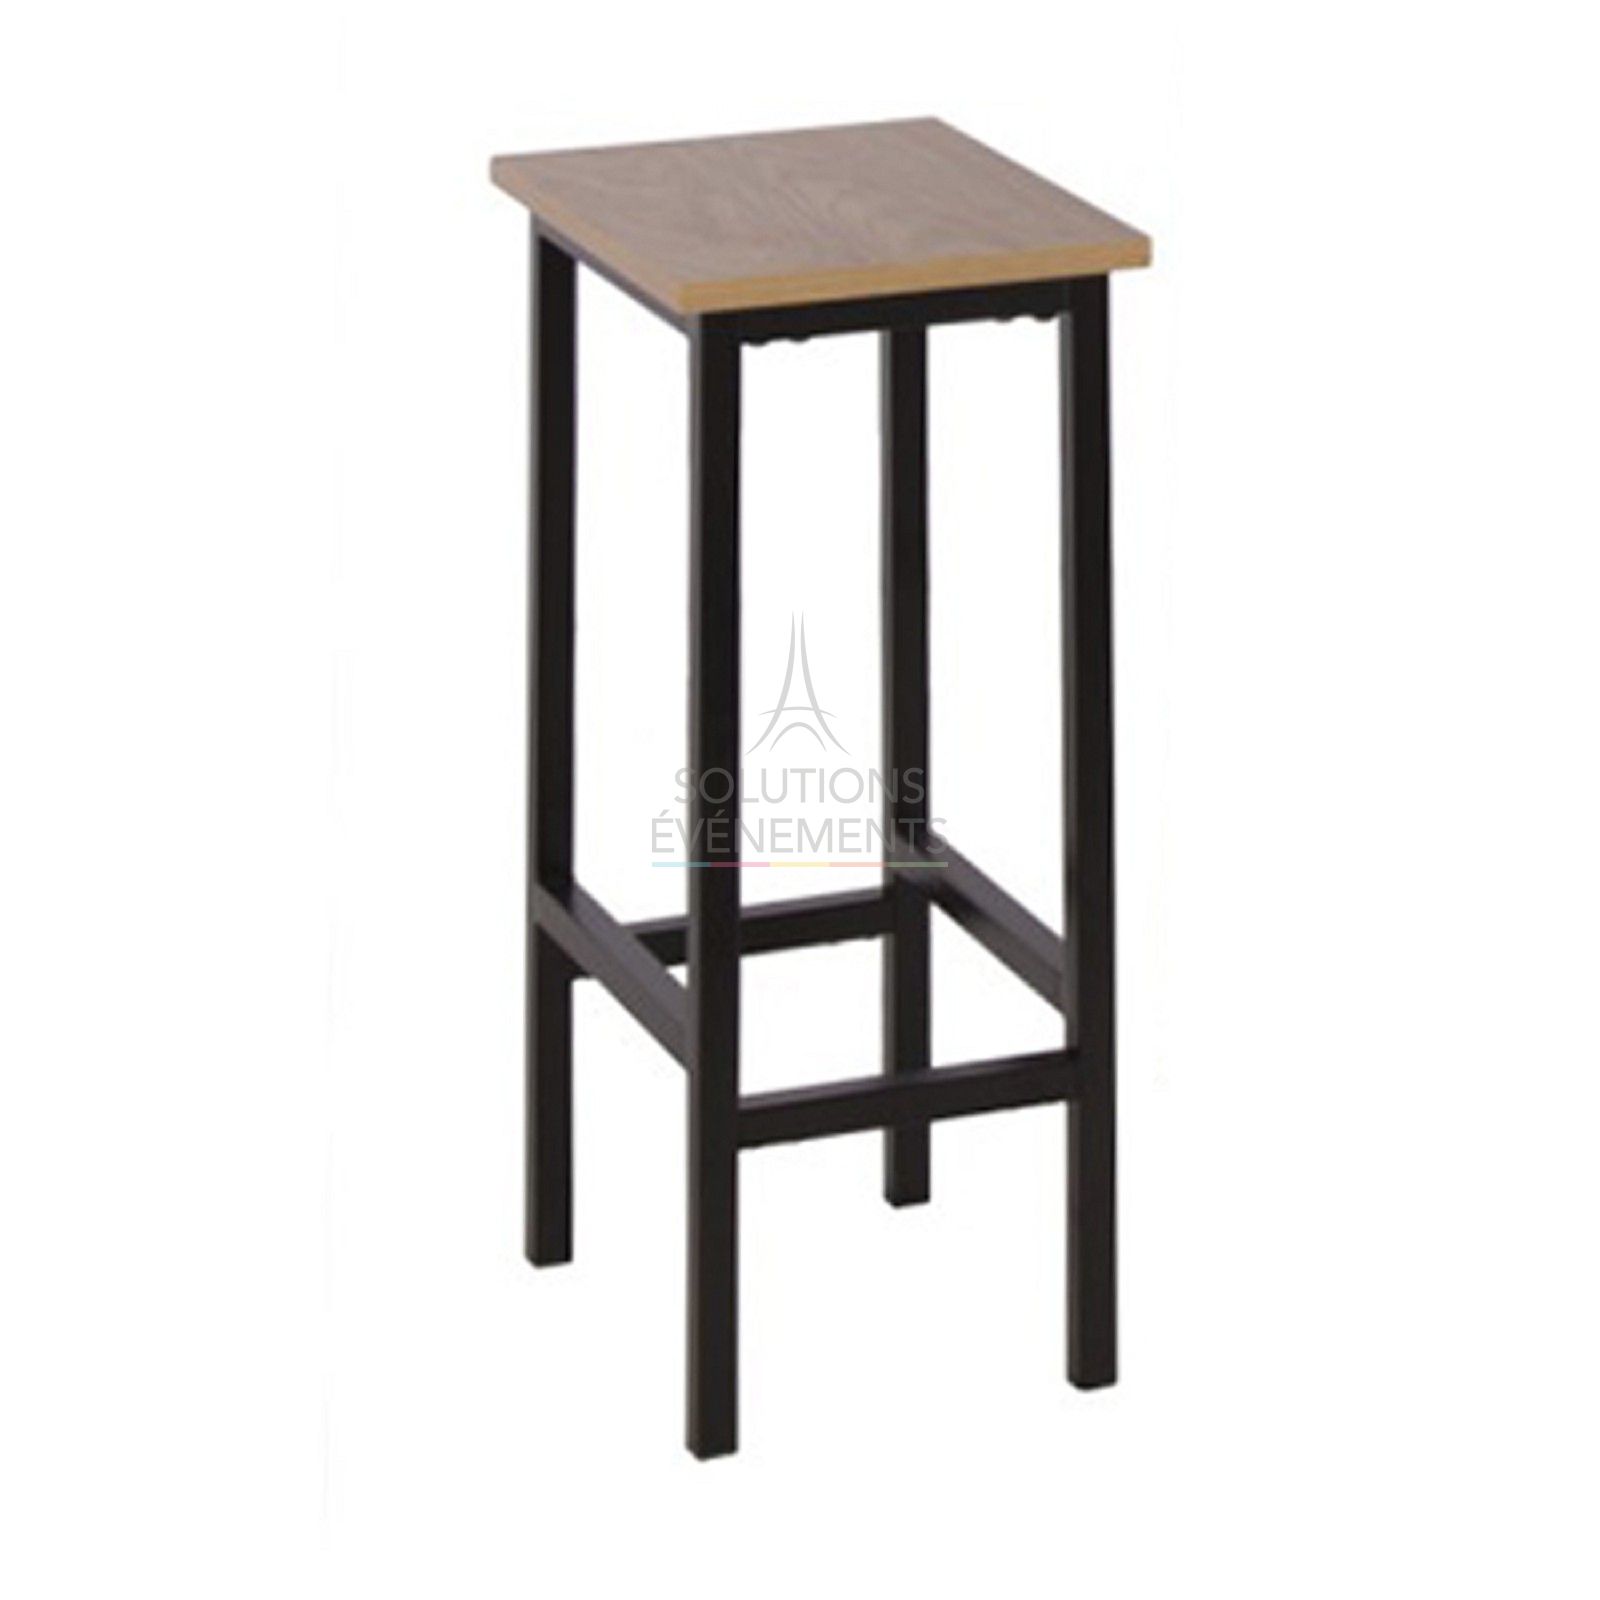 Rental of metal and wood bar stool